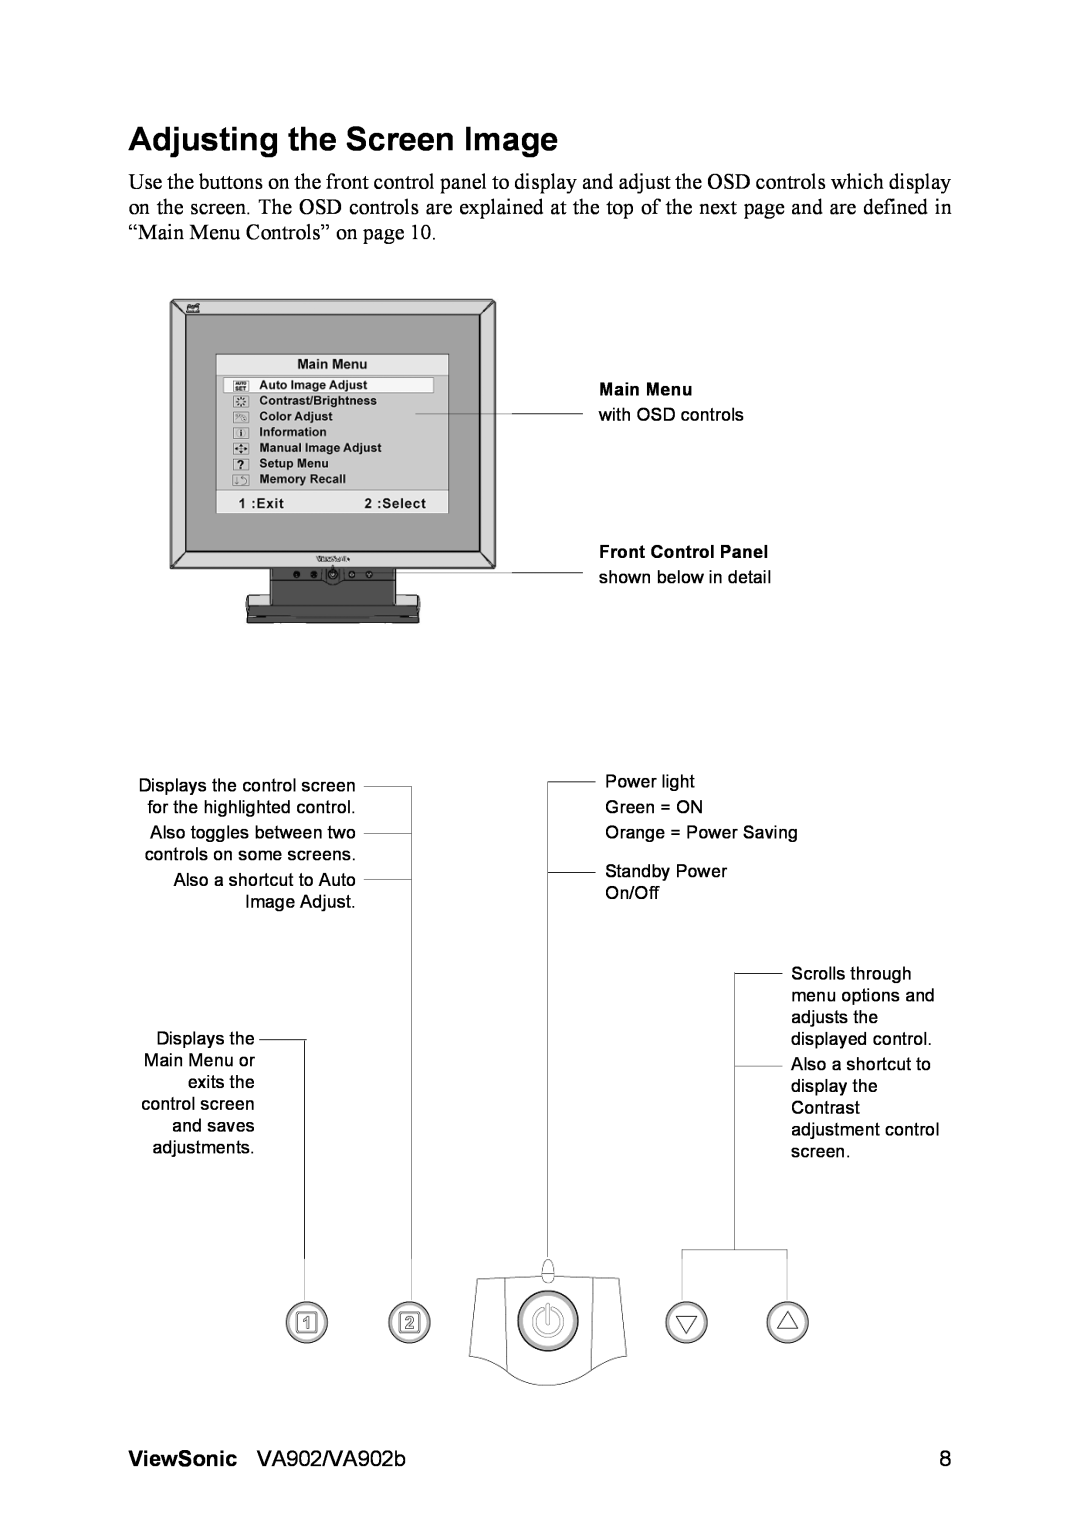 ViewSonic VA902 manual Adjusting the Screen Image, Main Menu, Front Control Panel 